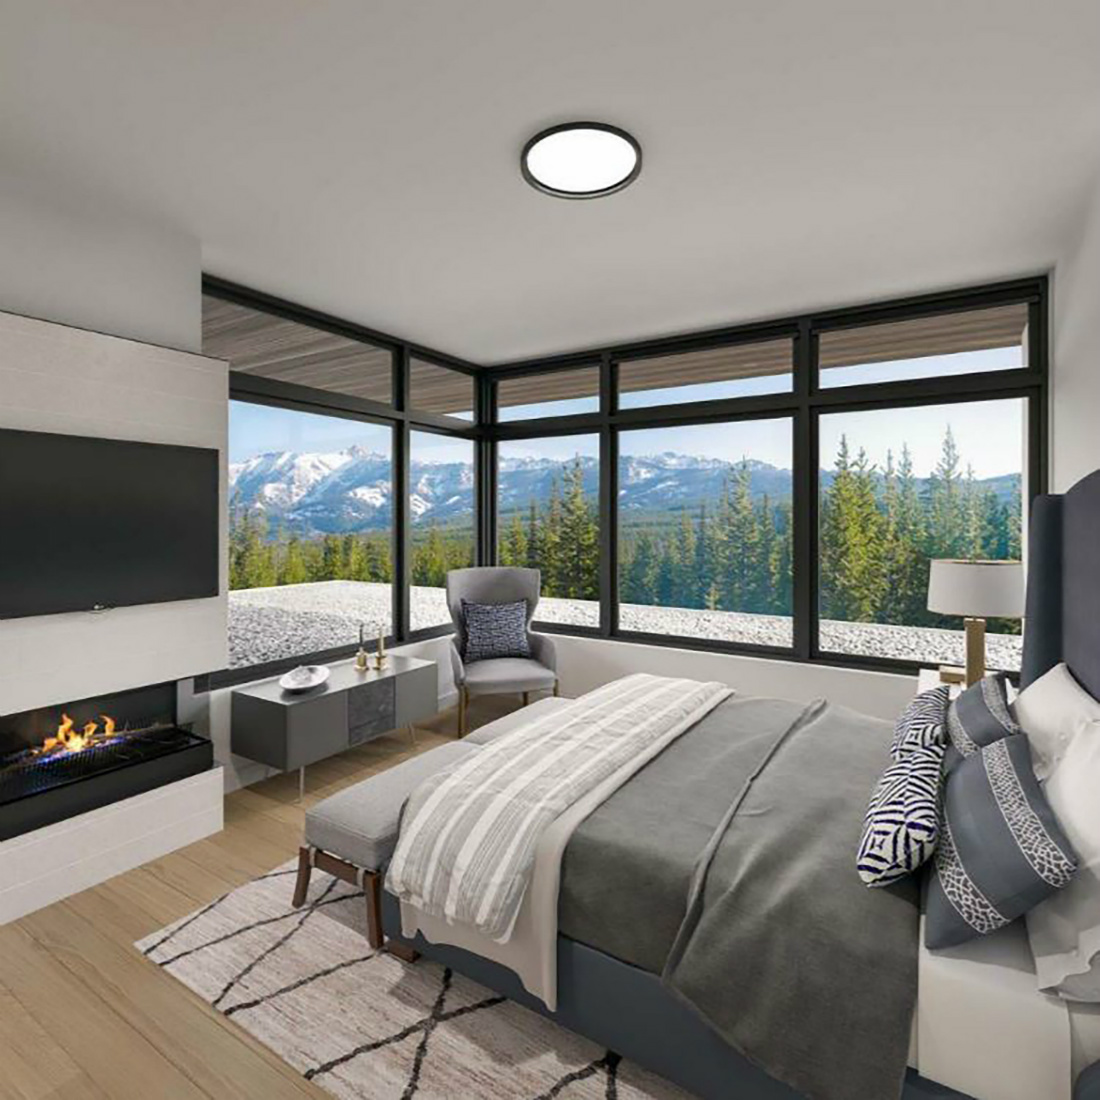 moonlight-basin-mt-bedroom-interior-design-fireplace